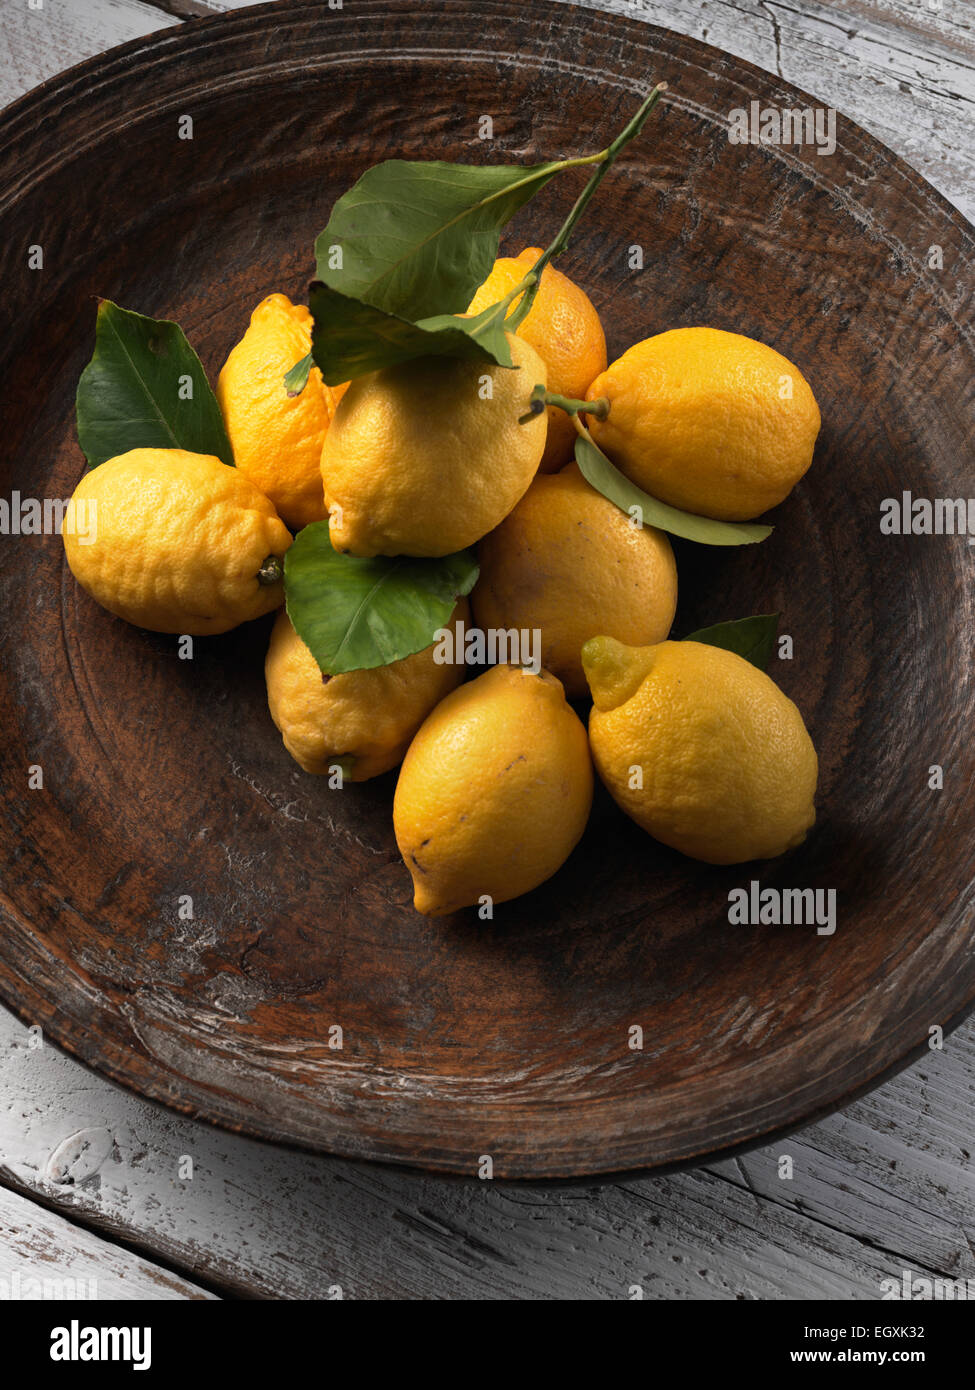 Celebrating Sicilian Lemon on Real Food Traveler